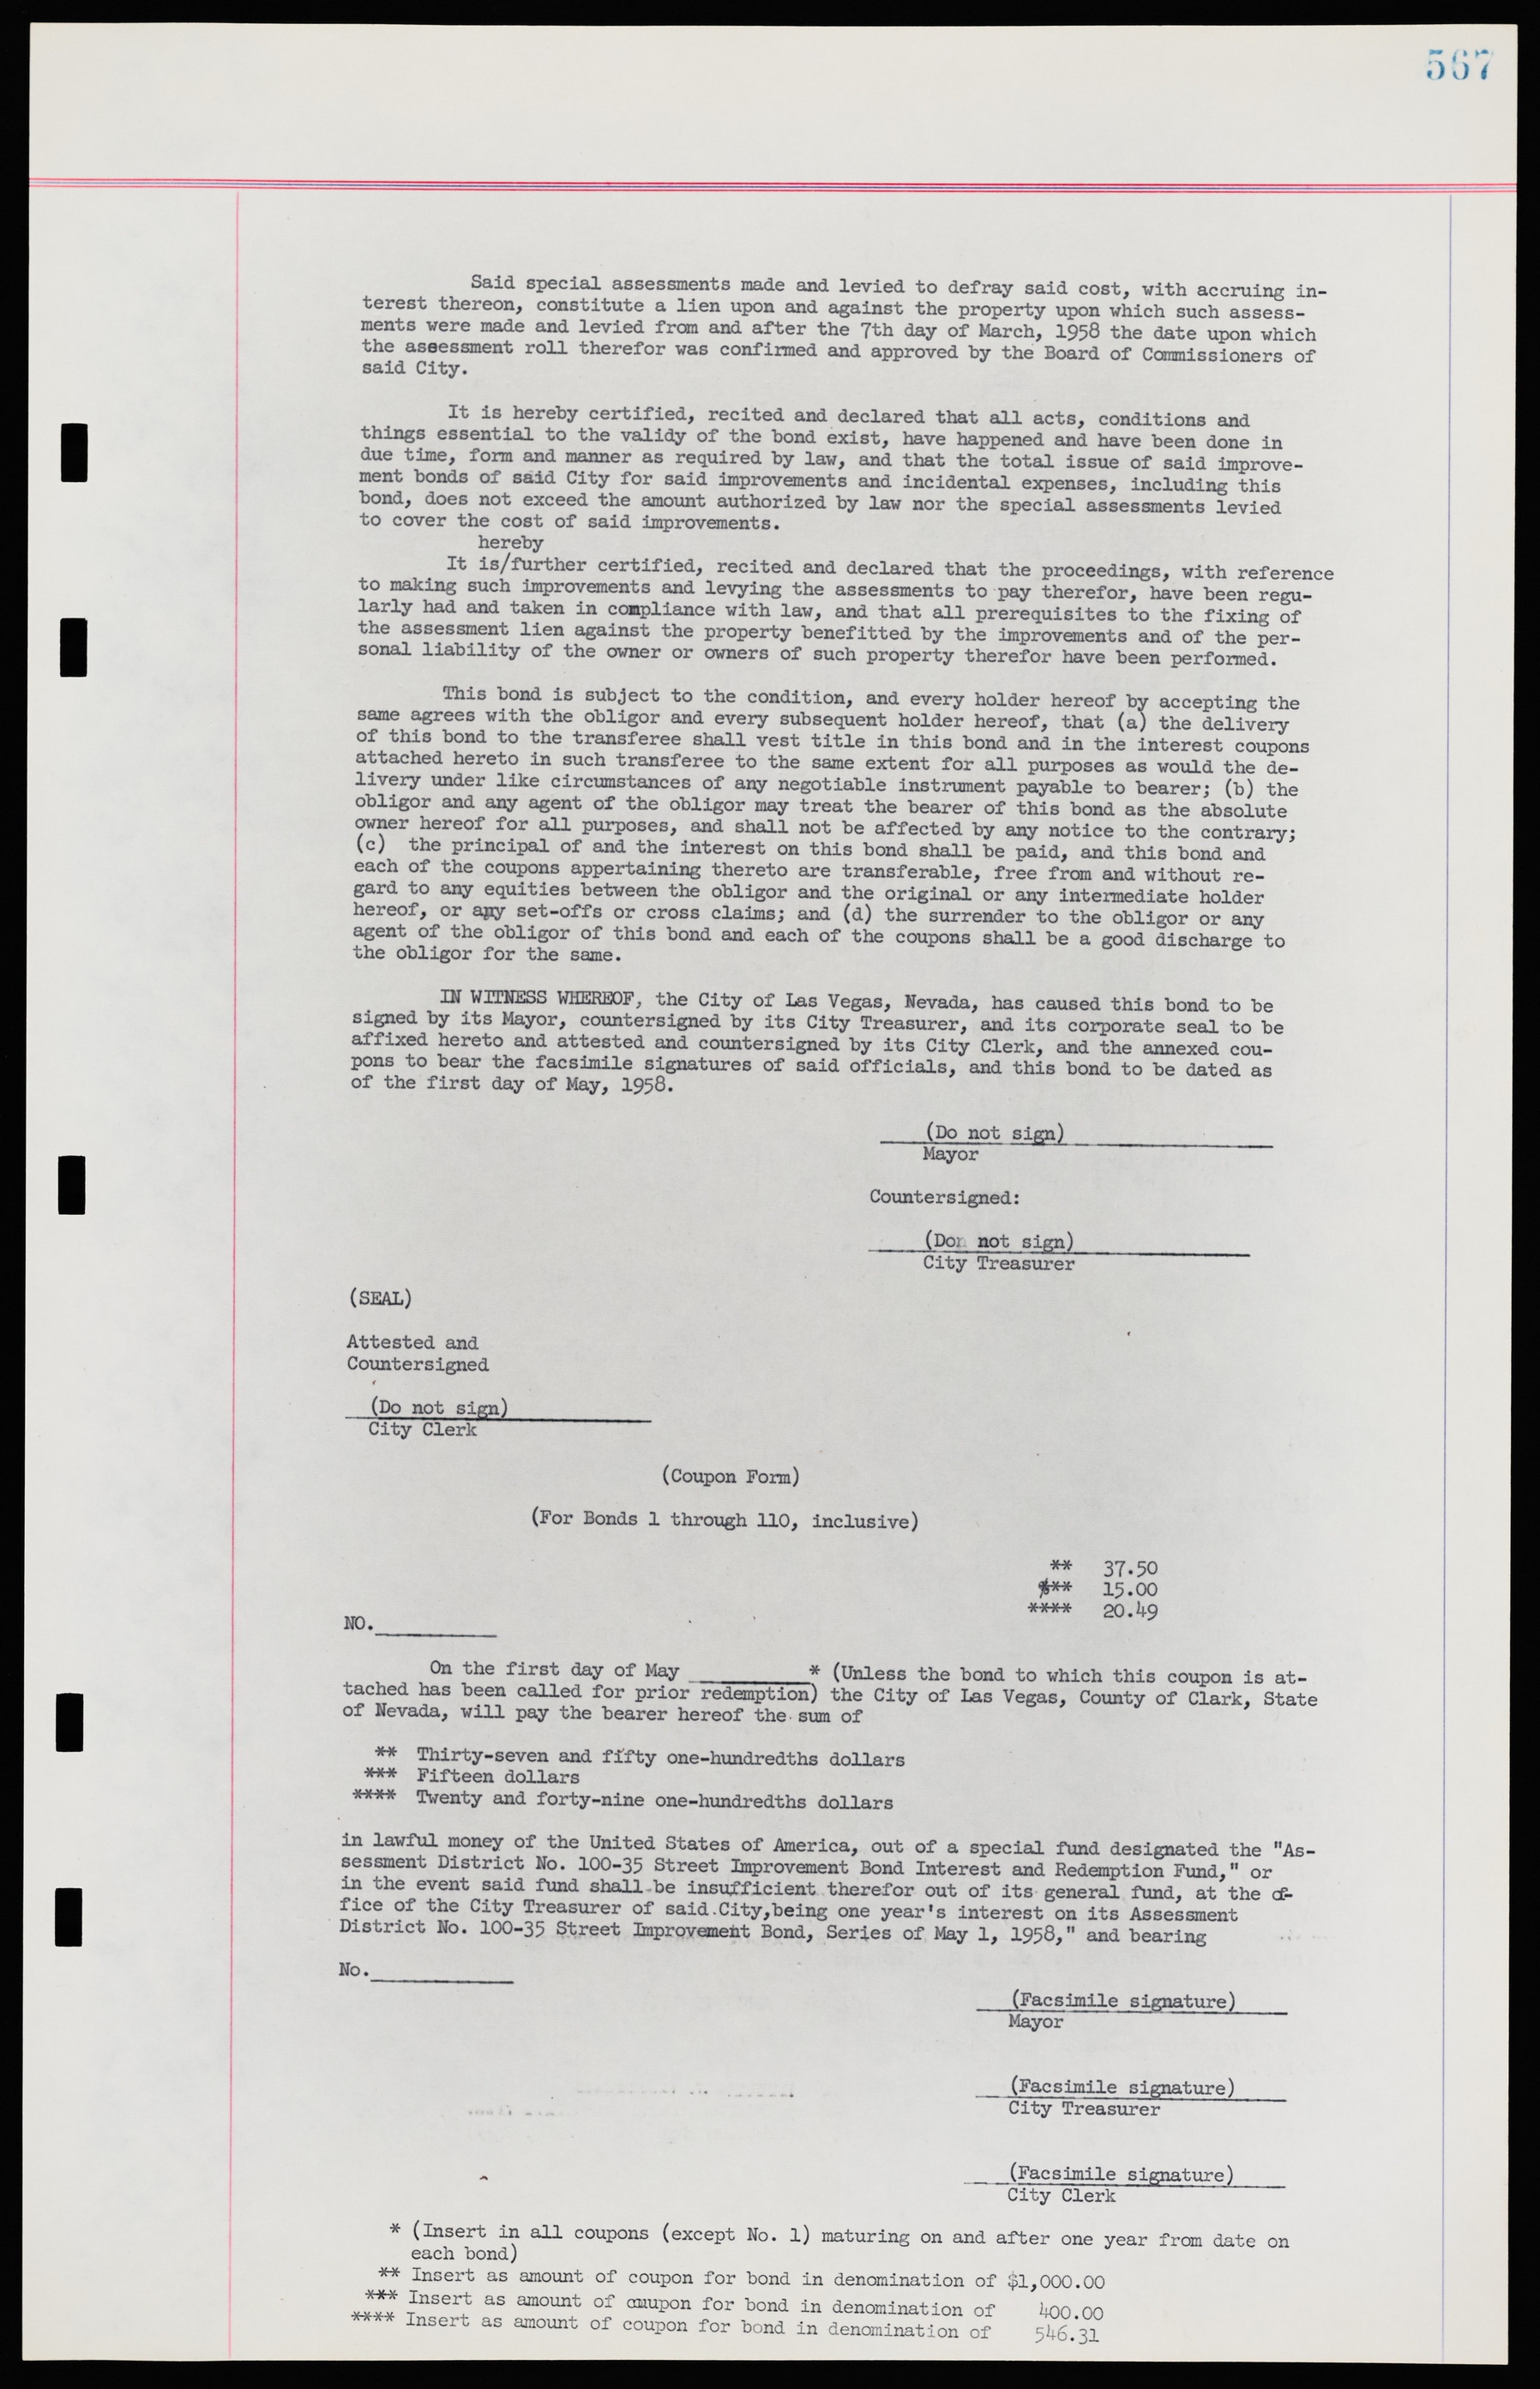 Las Vegas City Ordinances, November 13, 1950 to August 6, 1958, lvc000015-575